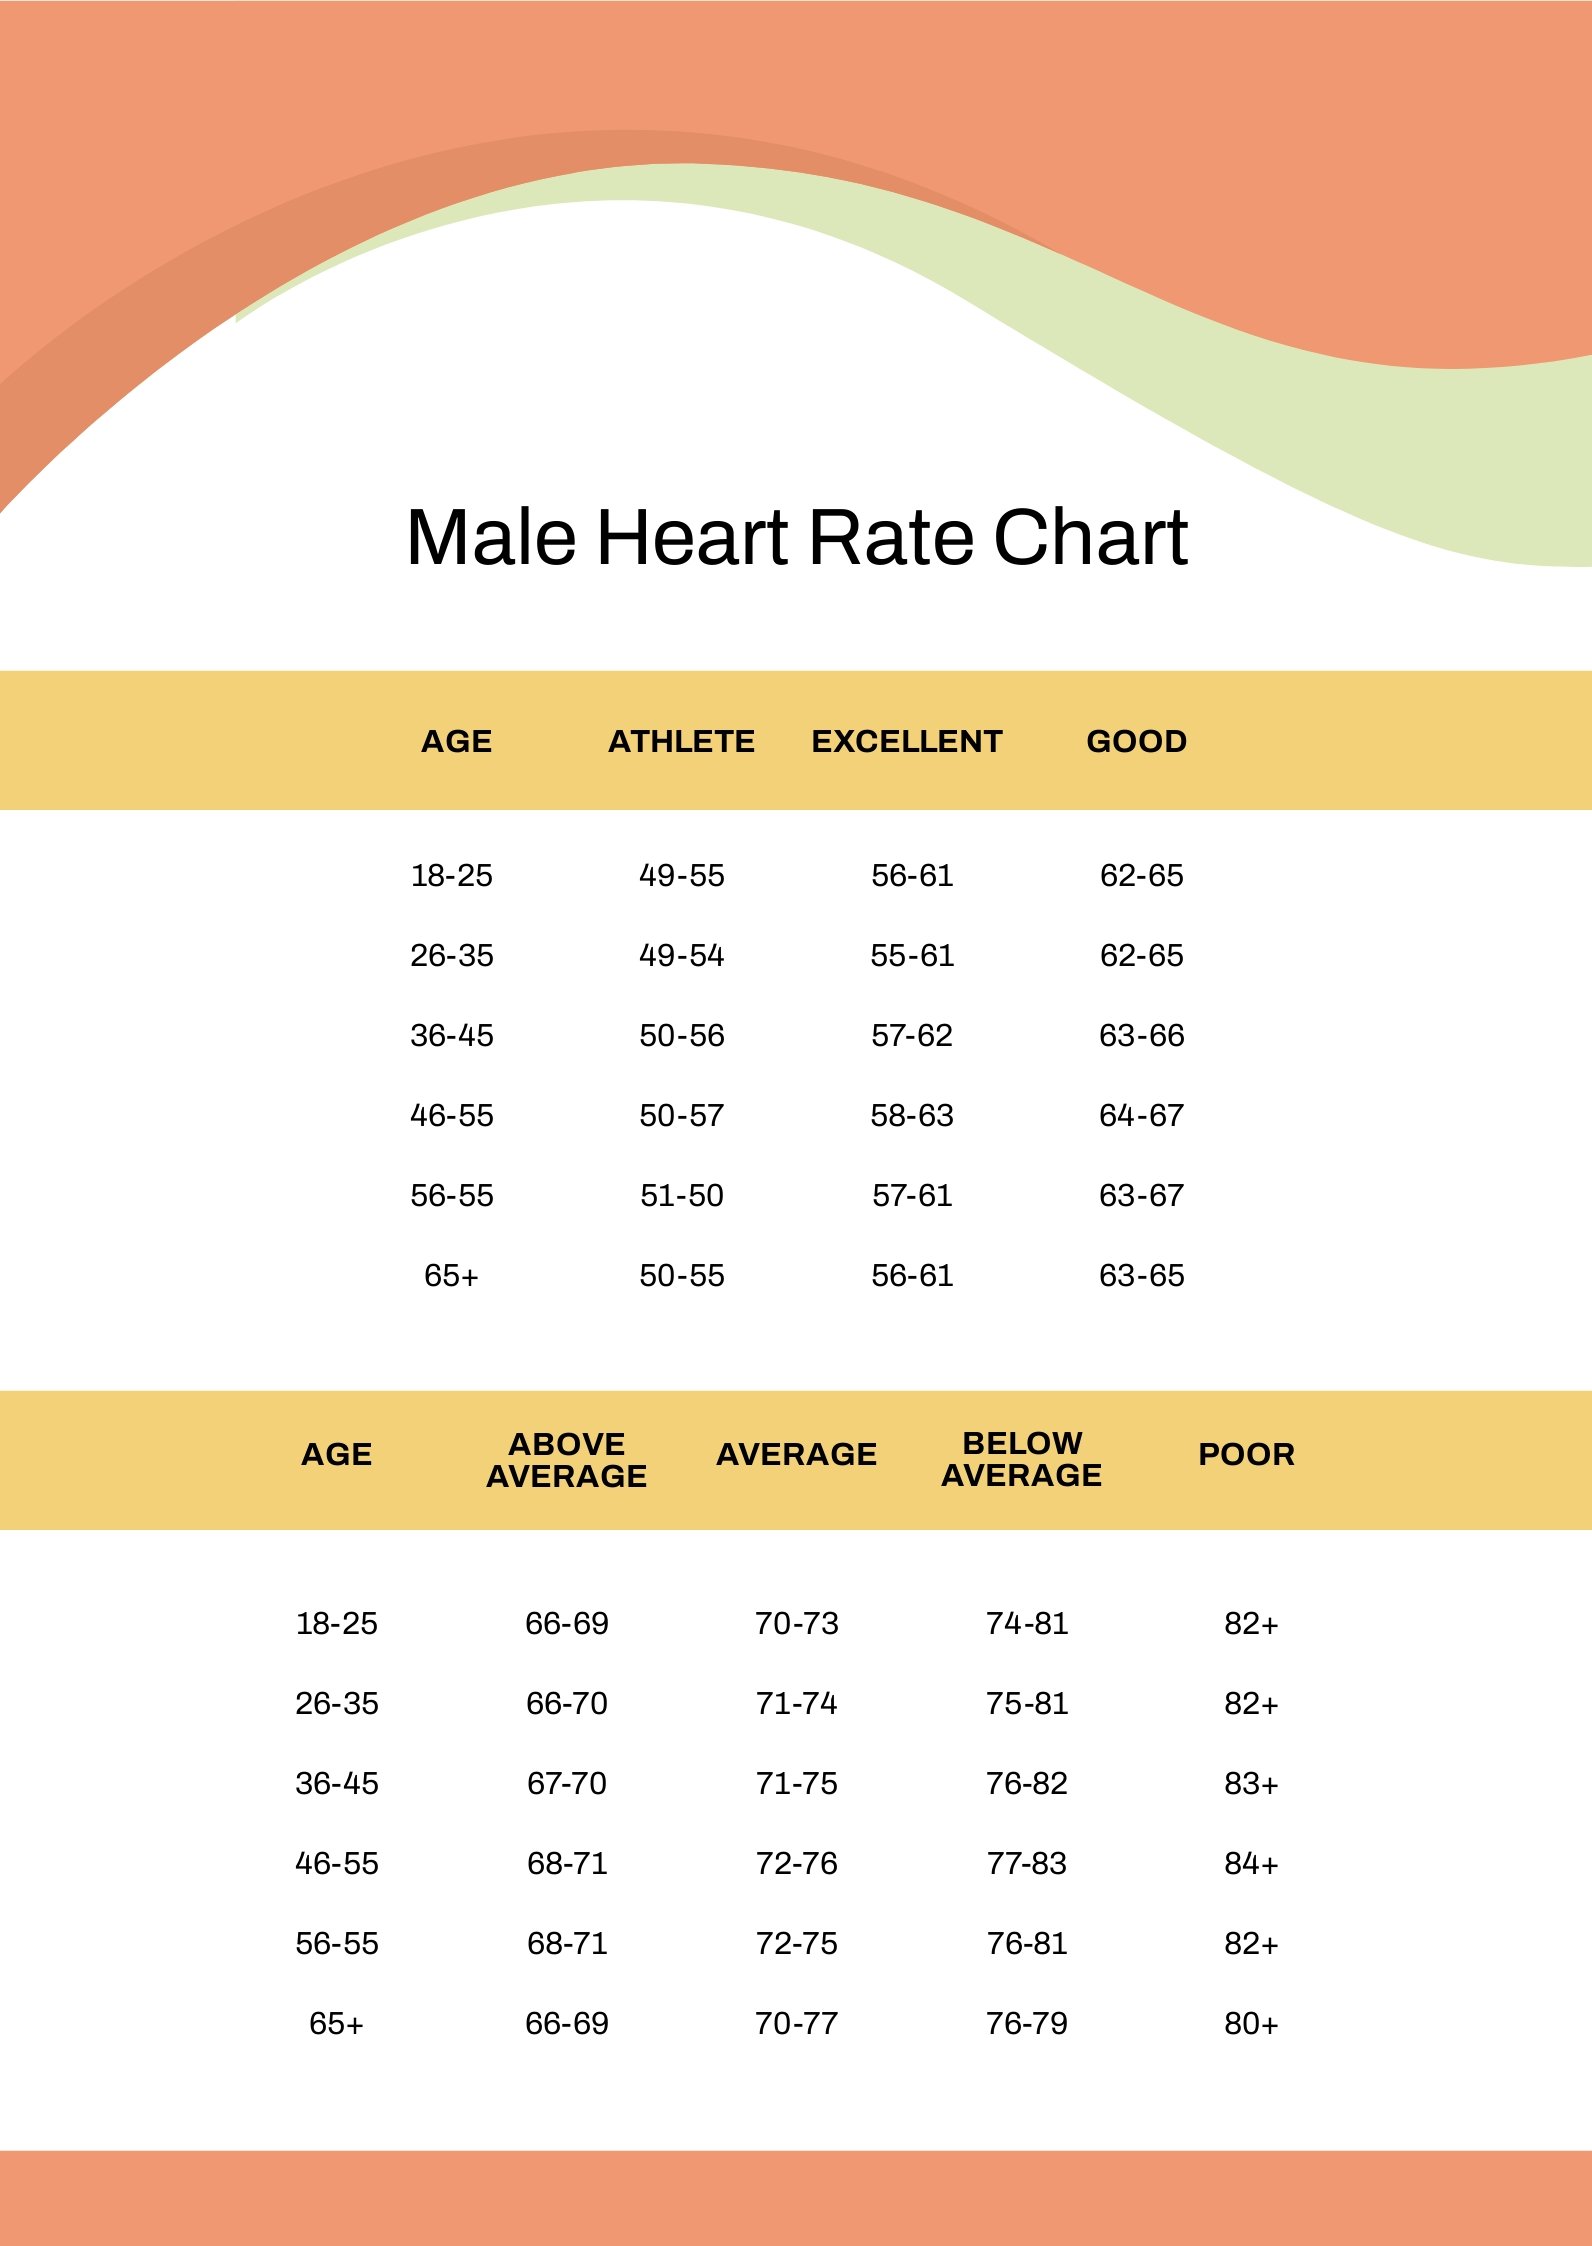 Male Heart Rate Chart